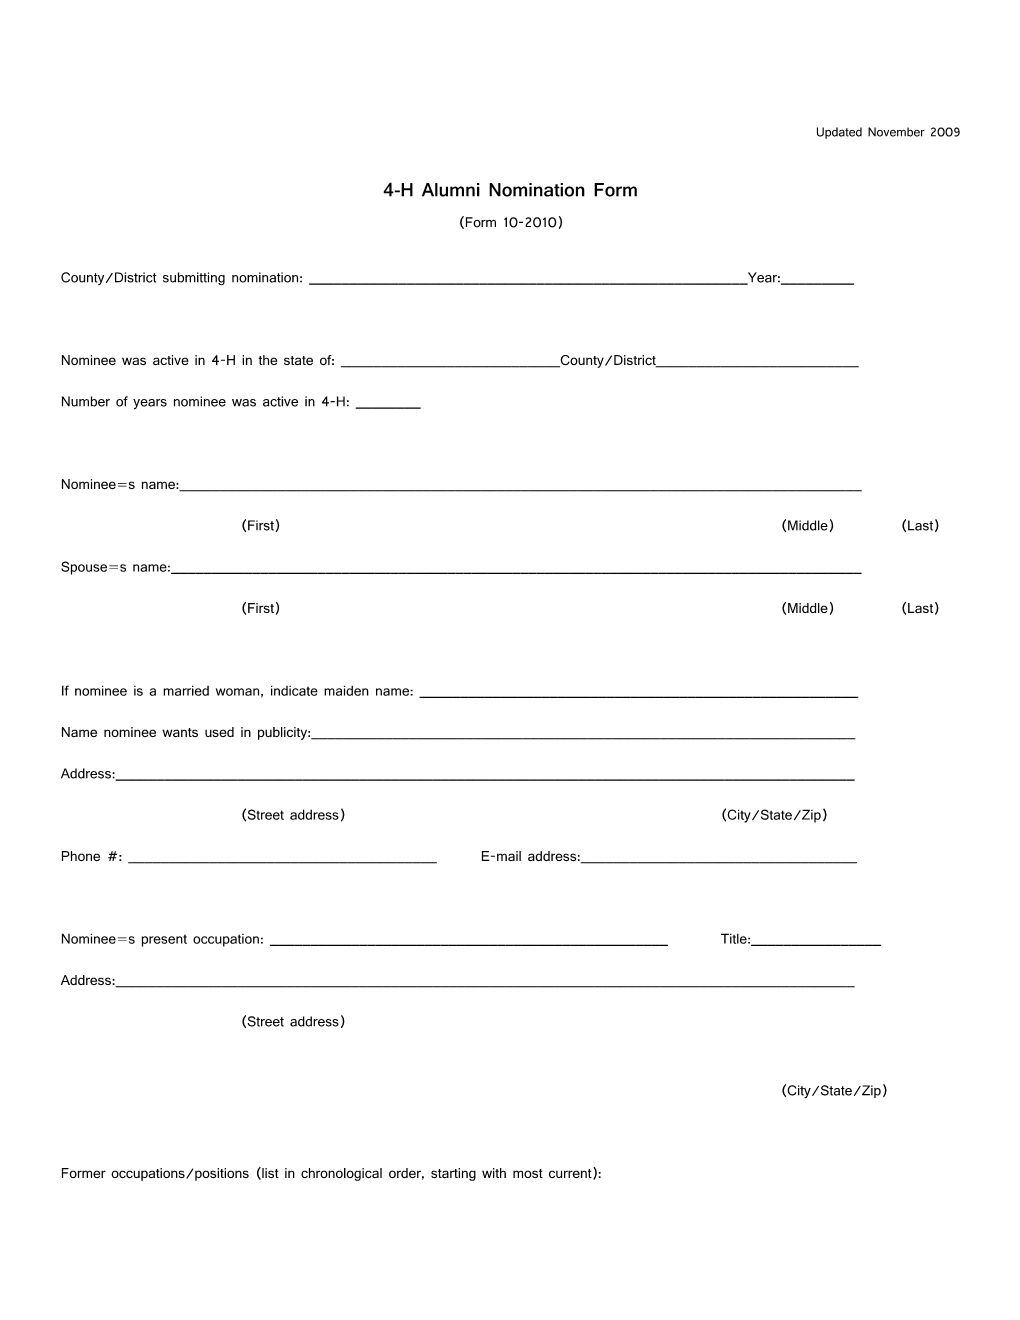 4-H Alumni Nomination Form